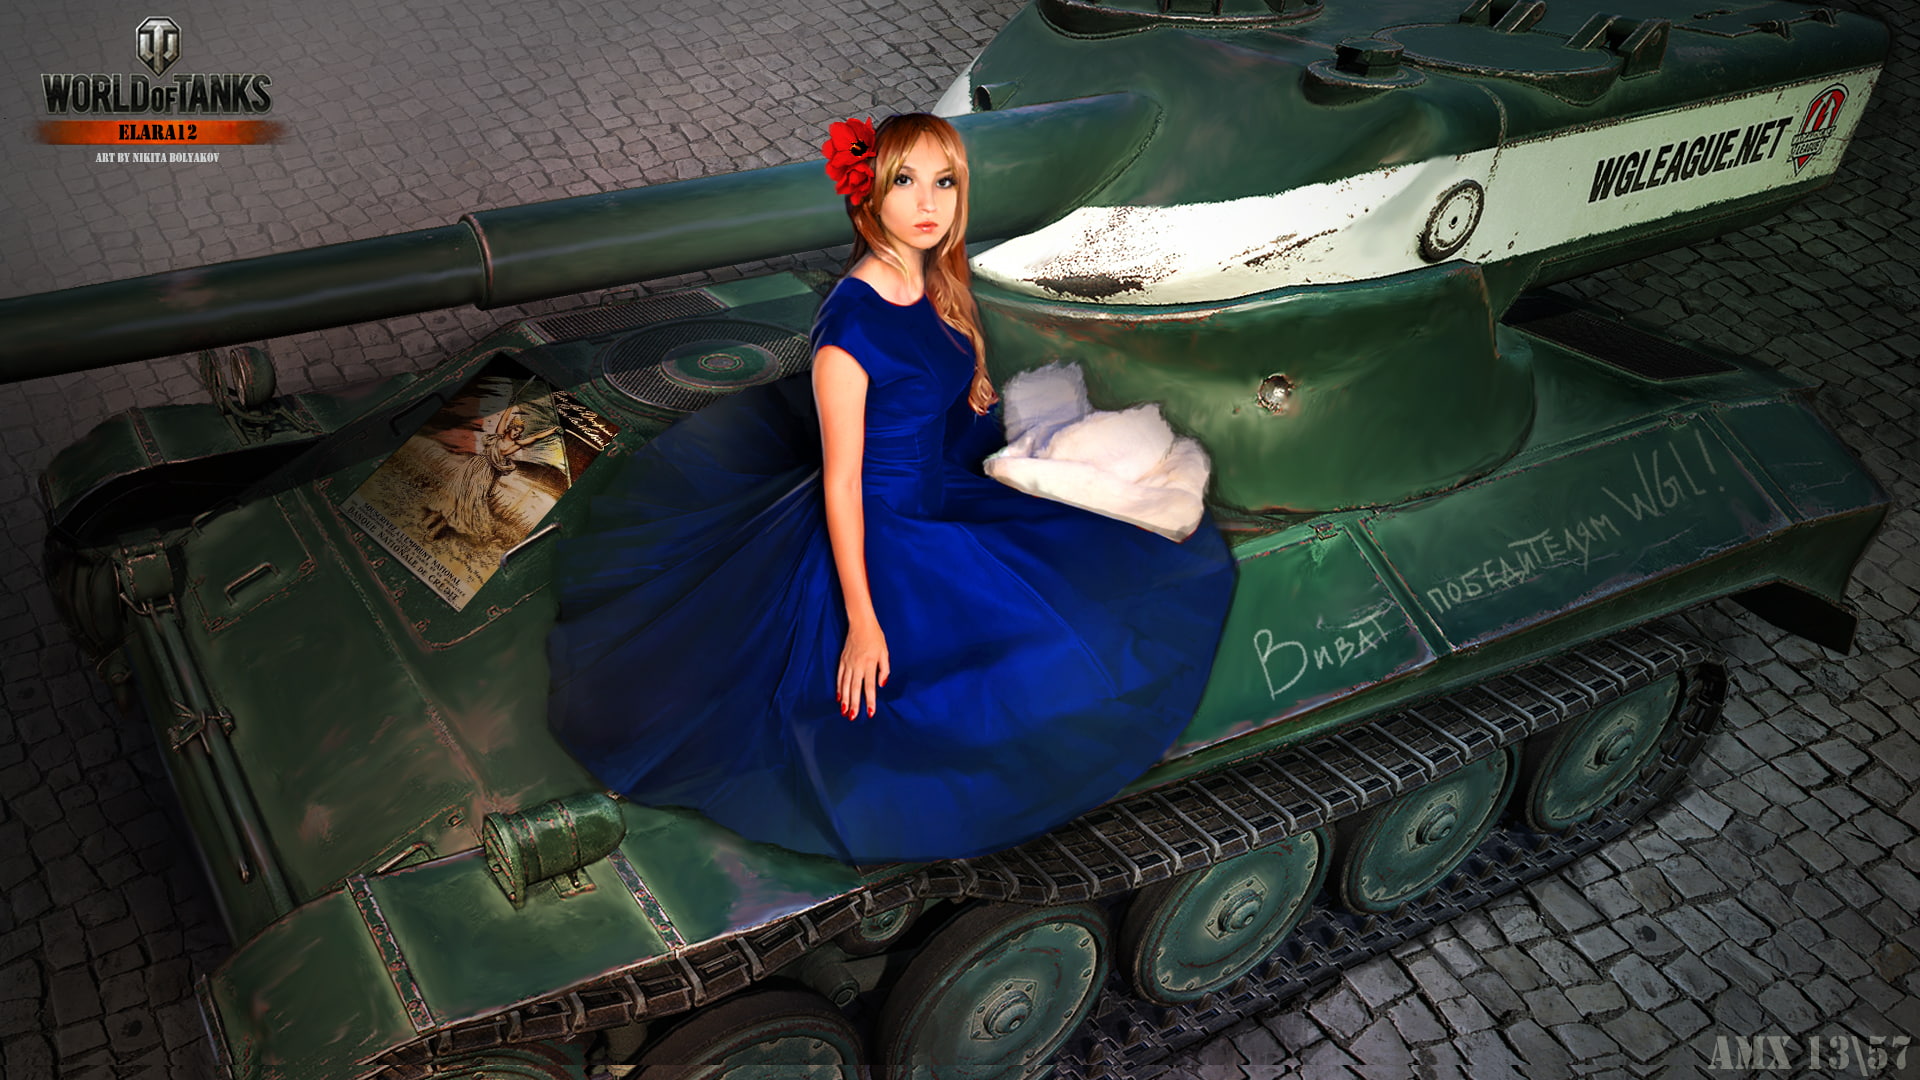 World of Tanks wallpaper, girl, France, dress, WoT, Wargaming.Net